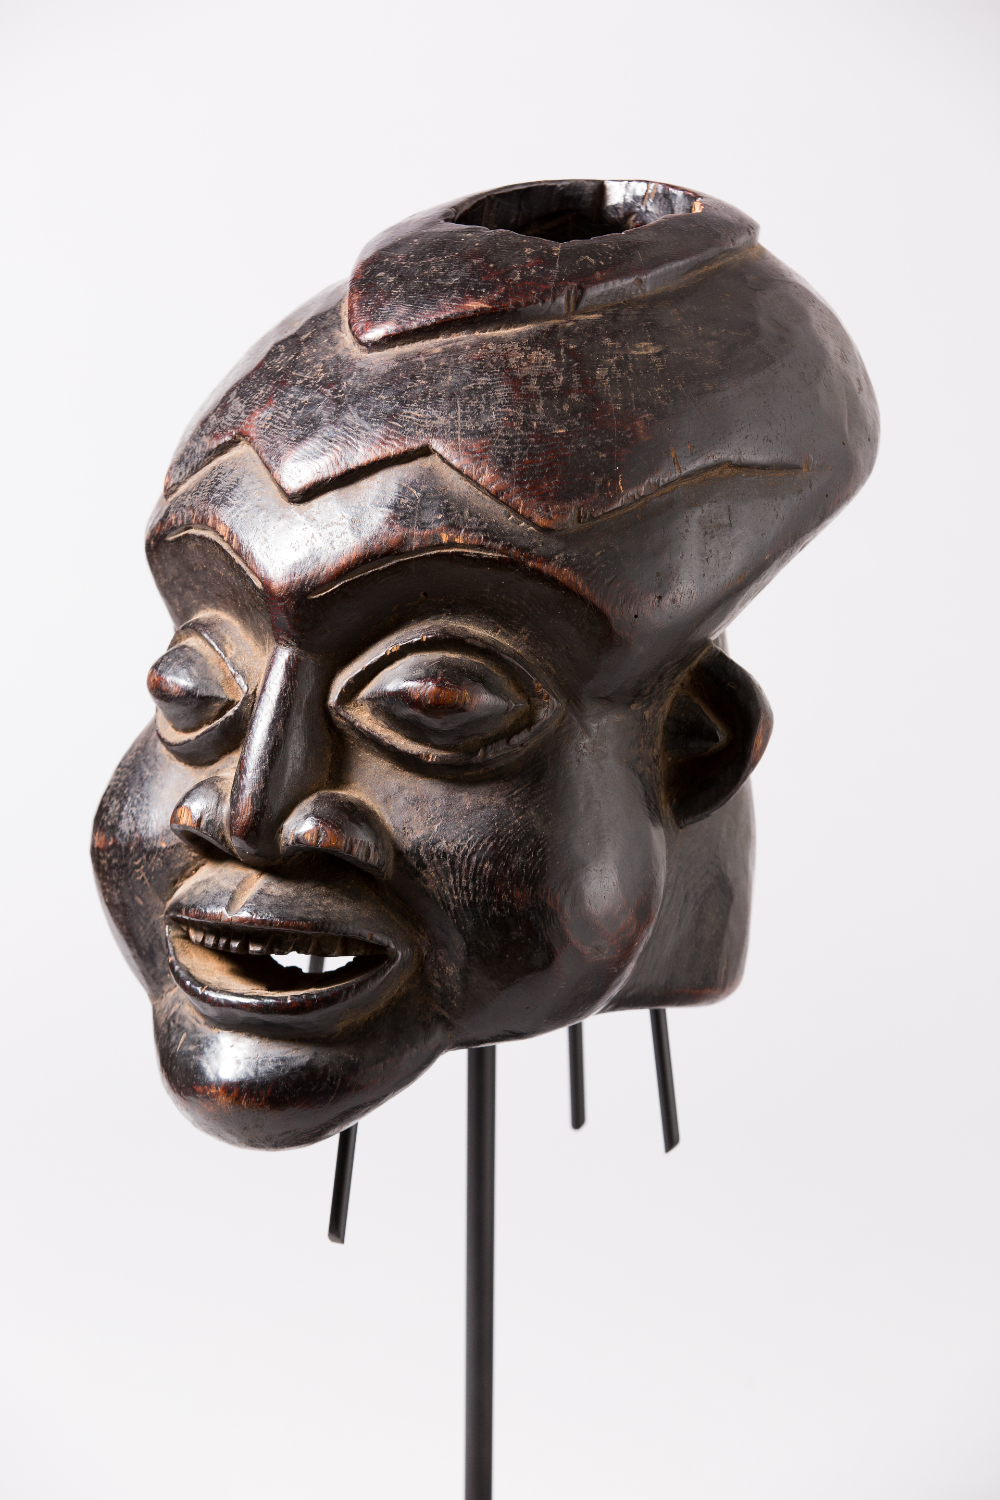 thumbnail of Female Helmet Mask from Northwestern Grassfields: Kom. medium: Wood. date: early 20th century